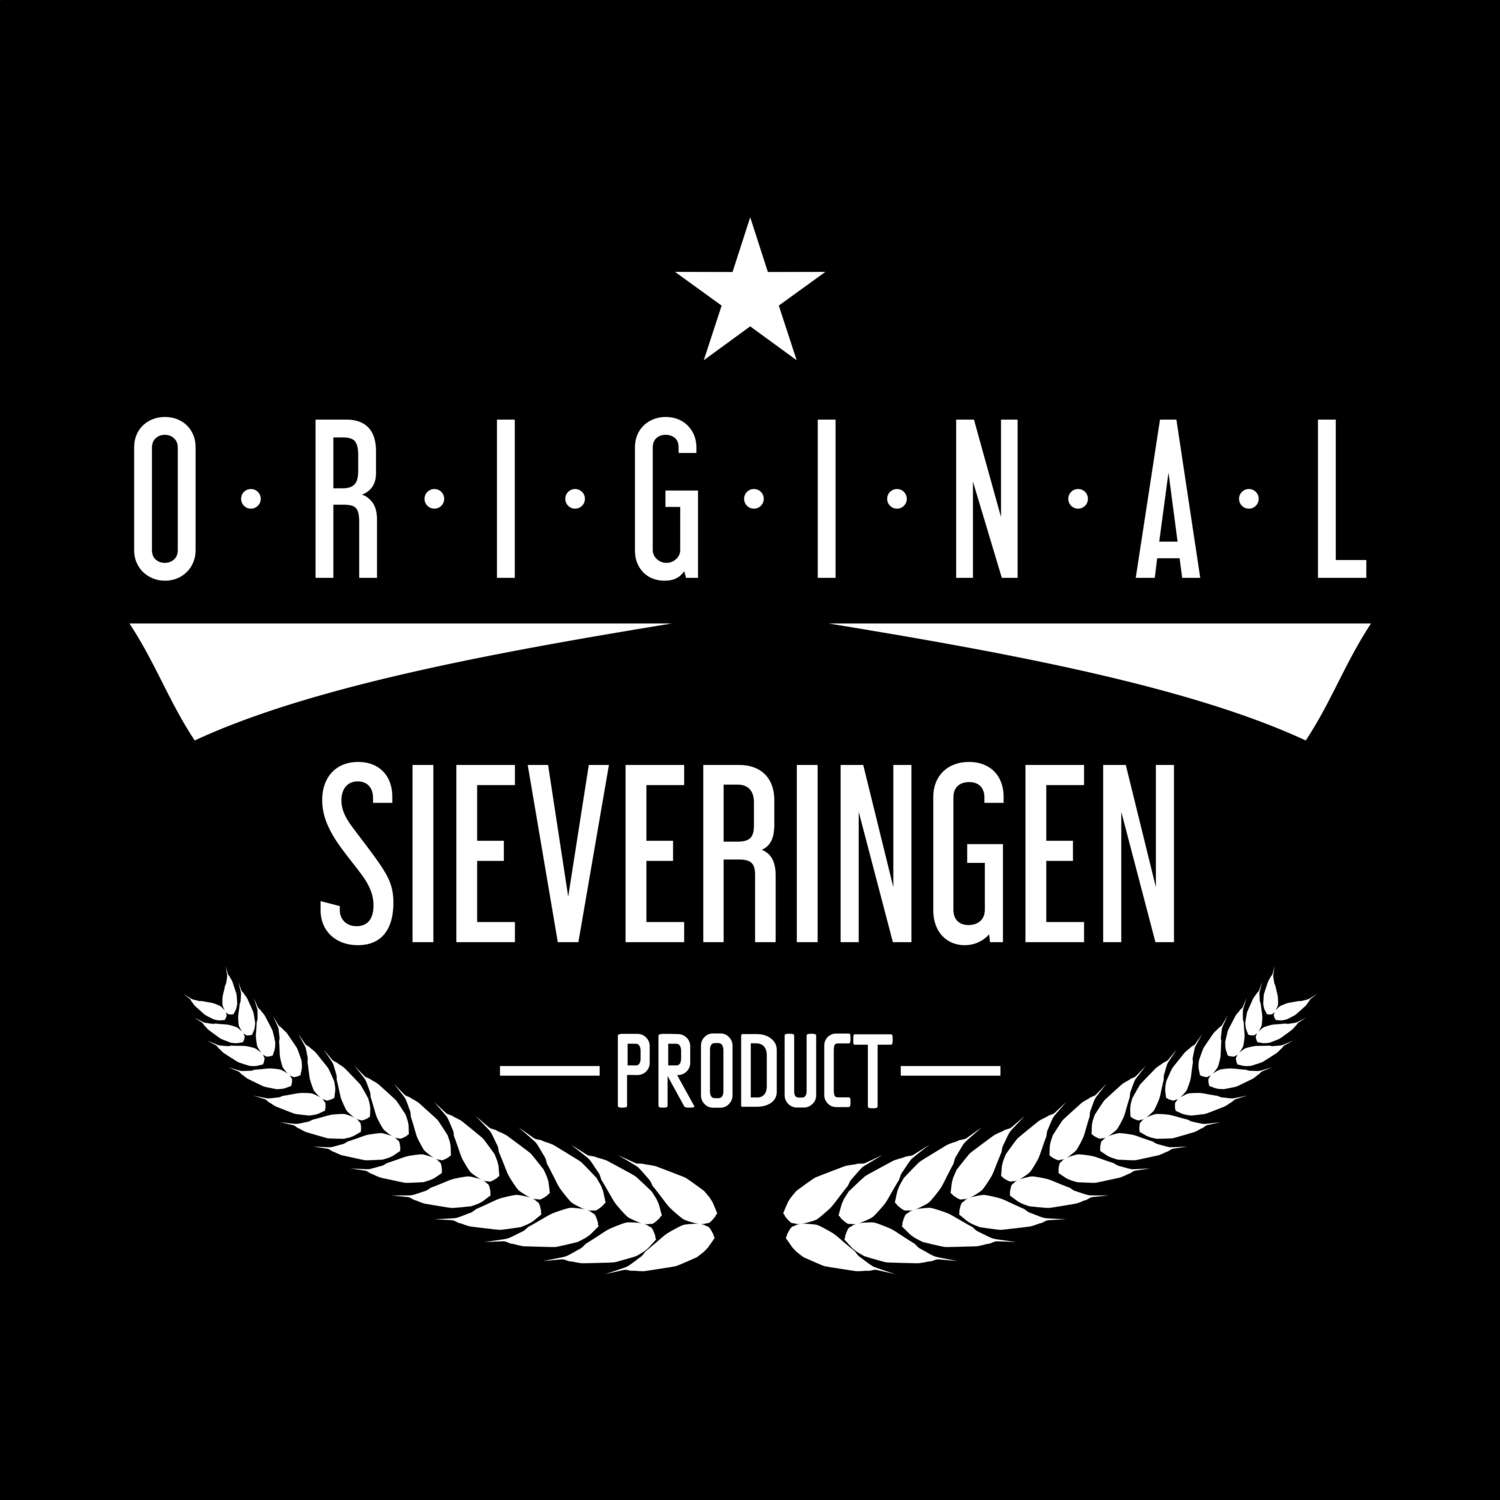 Sieveringen T-Shirt »Original Product«